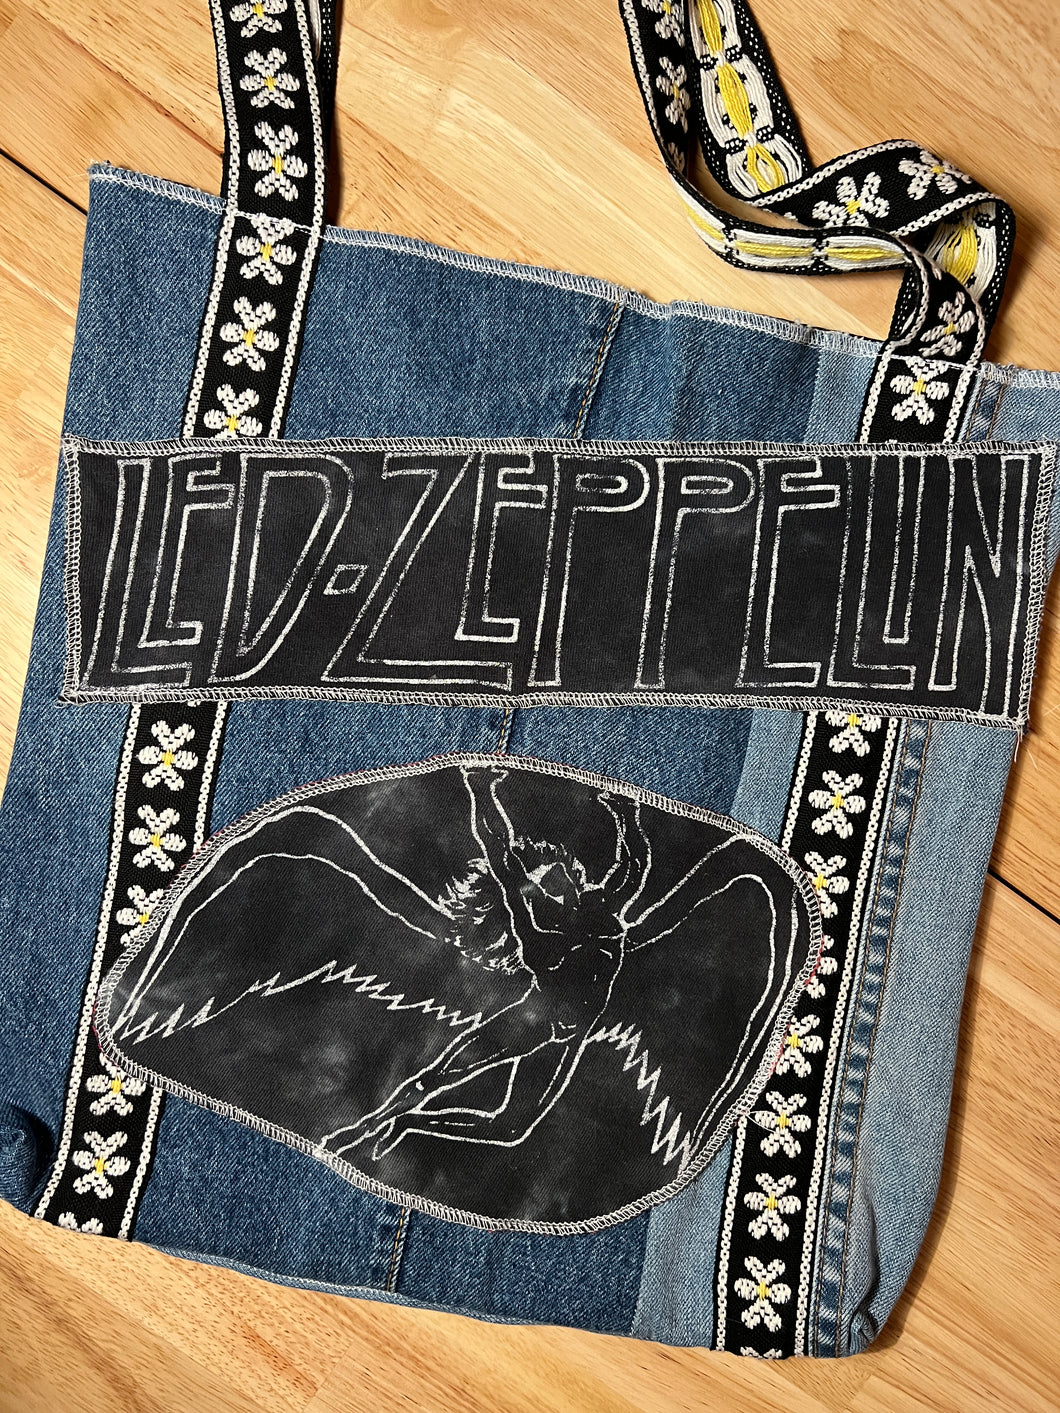 Led Zeppelin Jean Bag | Re-work